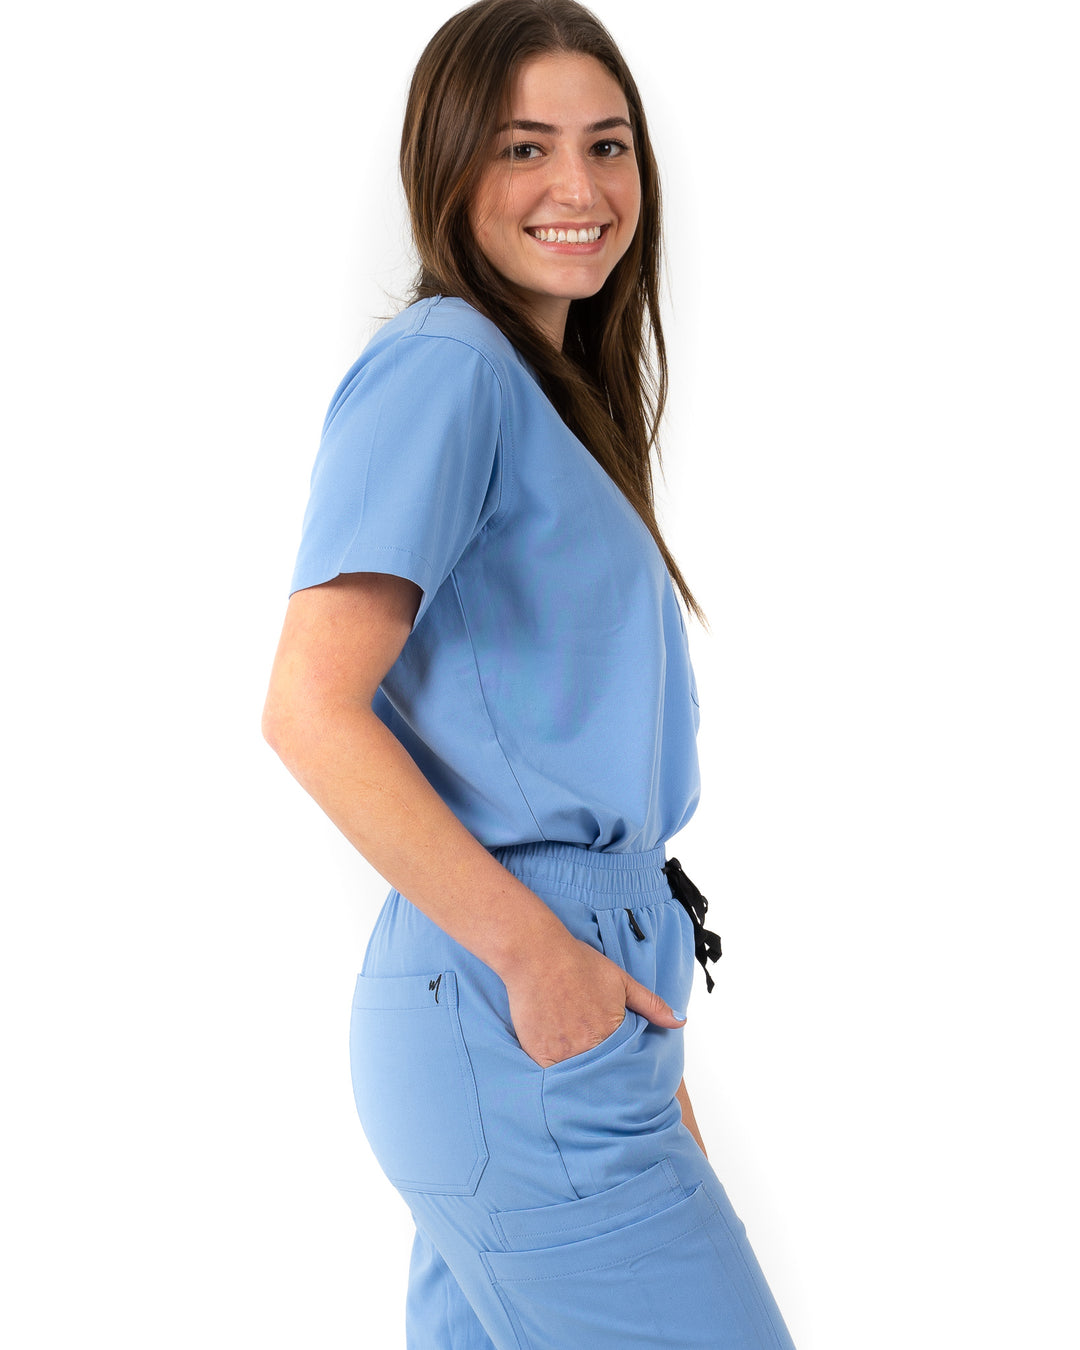 women's Ceil Blue Scrub Top - Jogger Scrubs by Millennials In Medicine (Mim Scrubs)